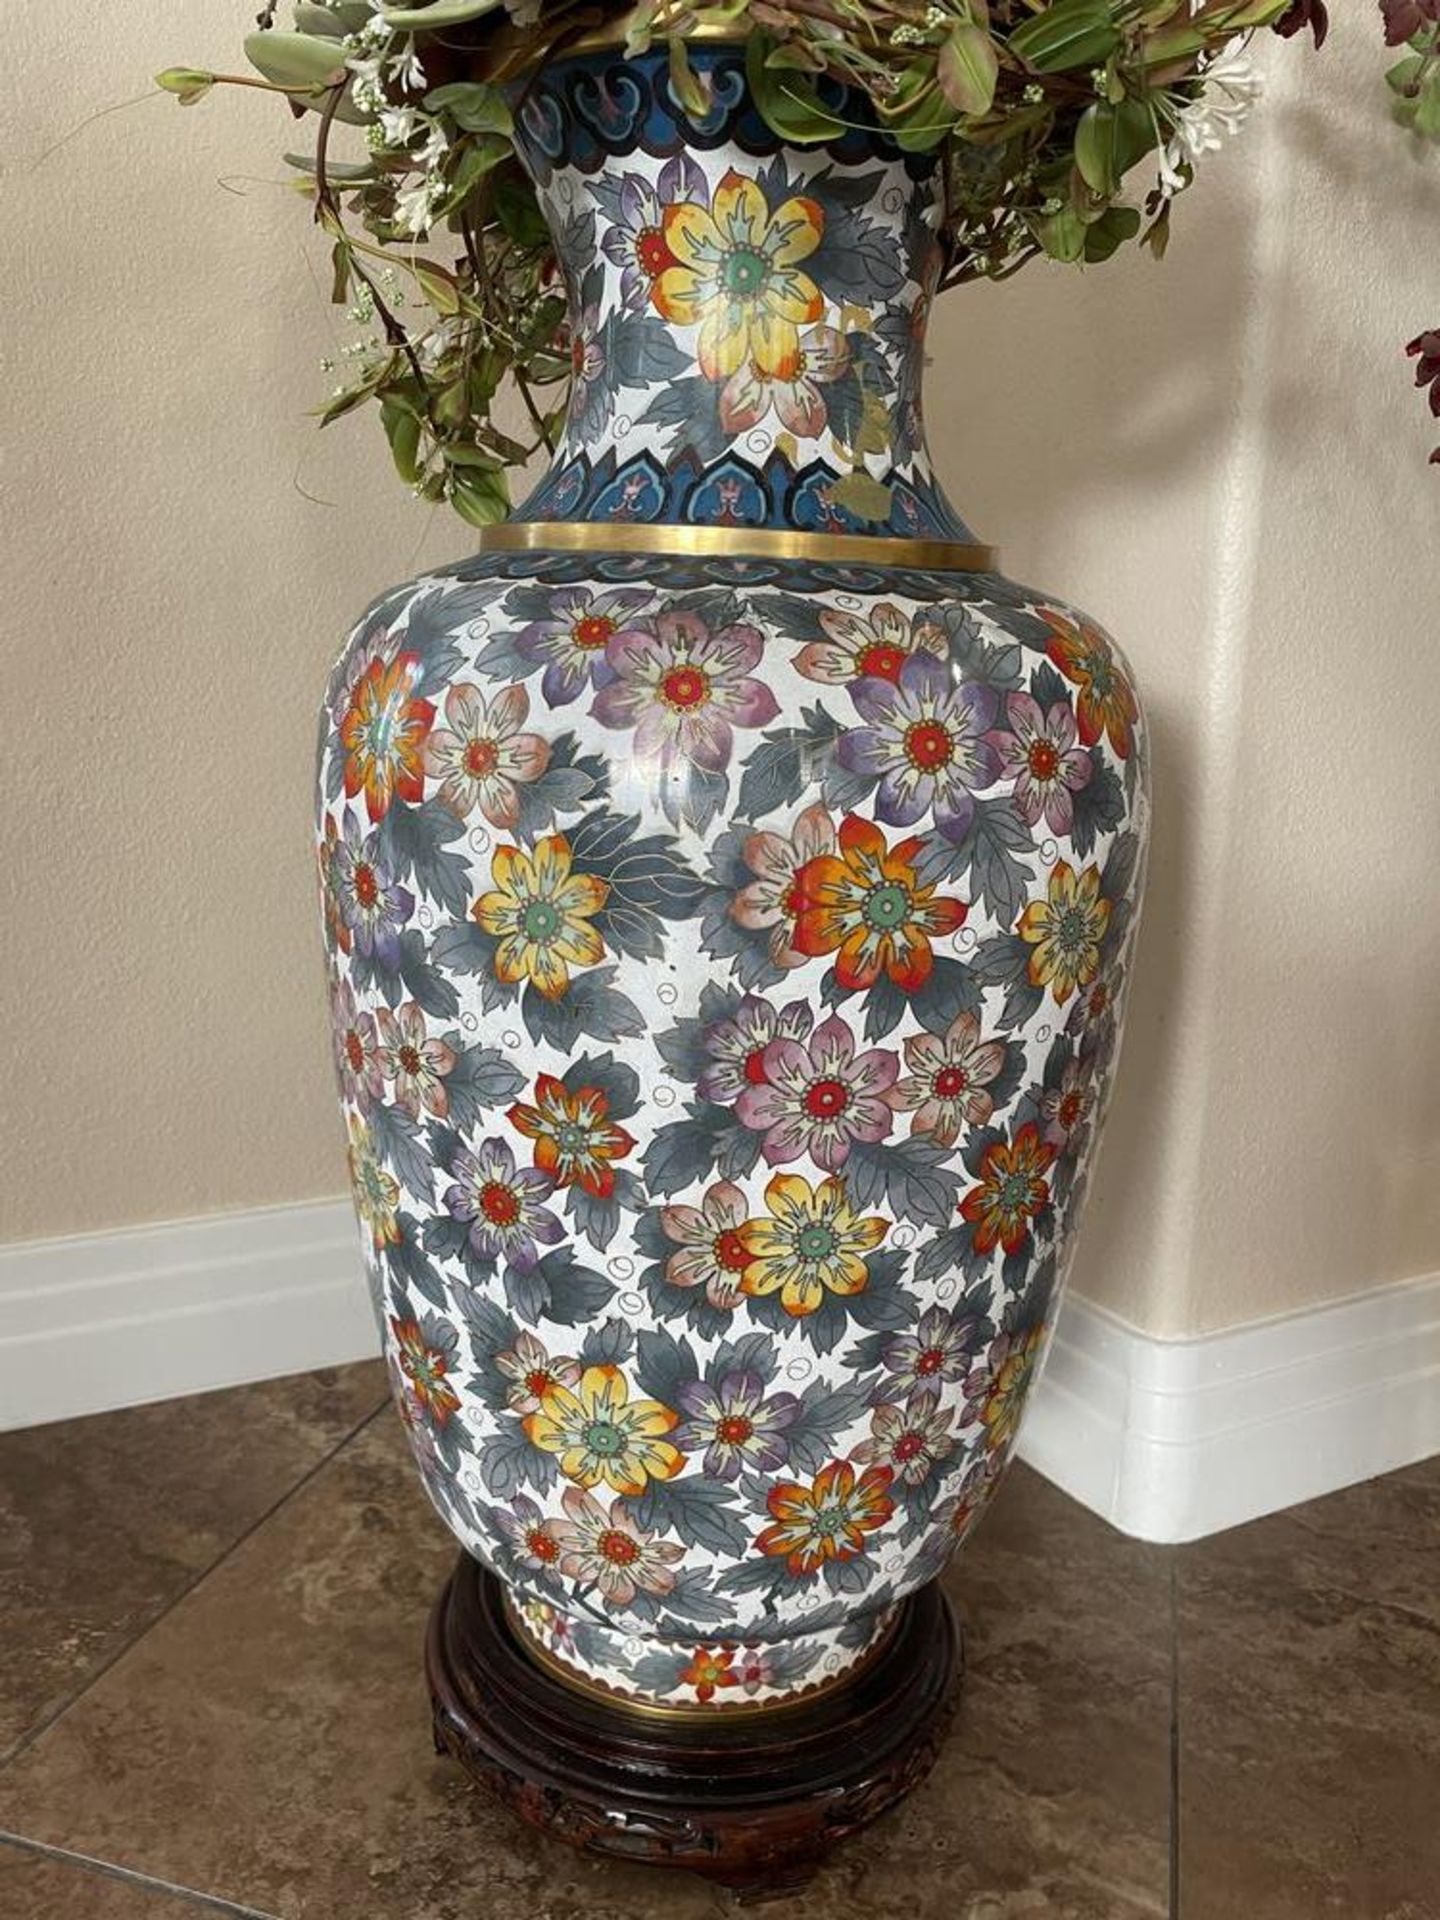 2 Large Antique East Asian Urn Vases w/ gold metal trim & enamal, removable artificial plants, Base - Image 3 of 8